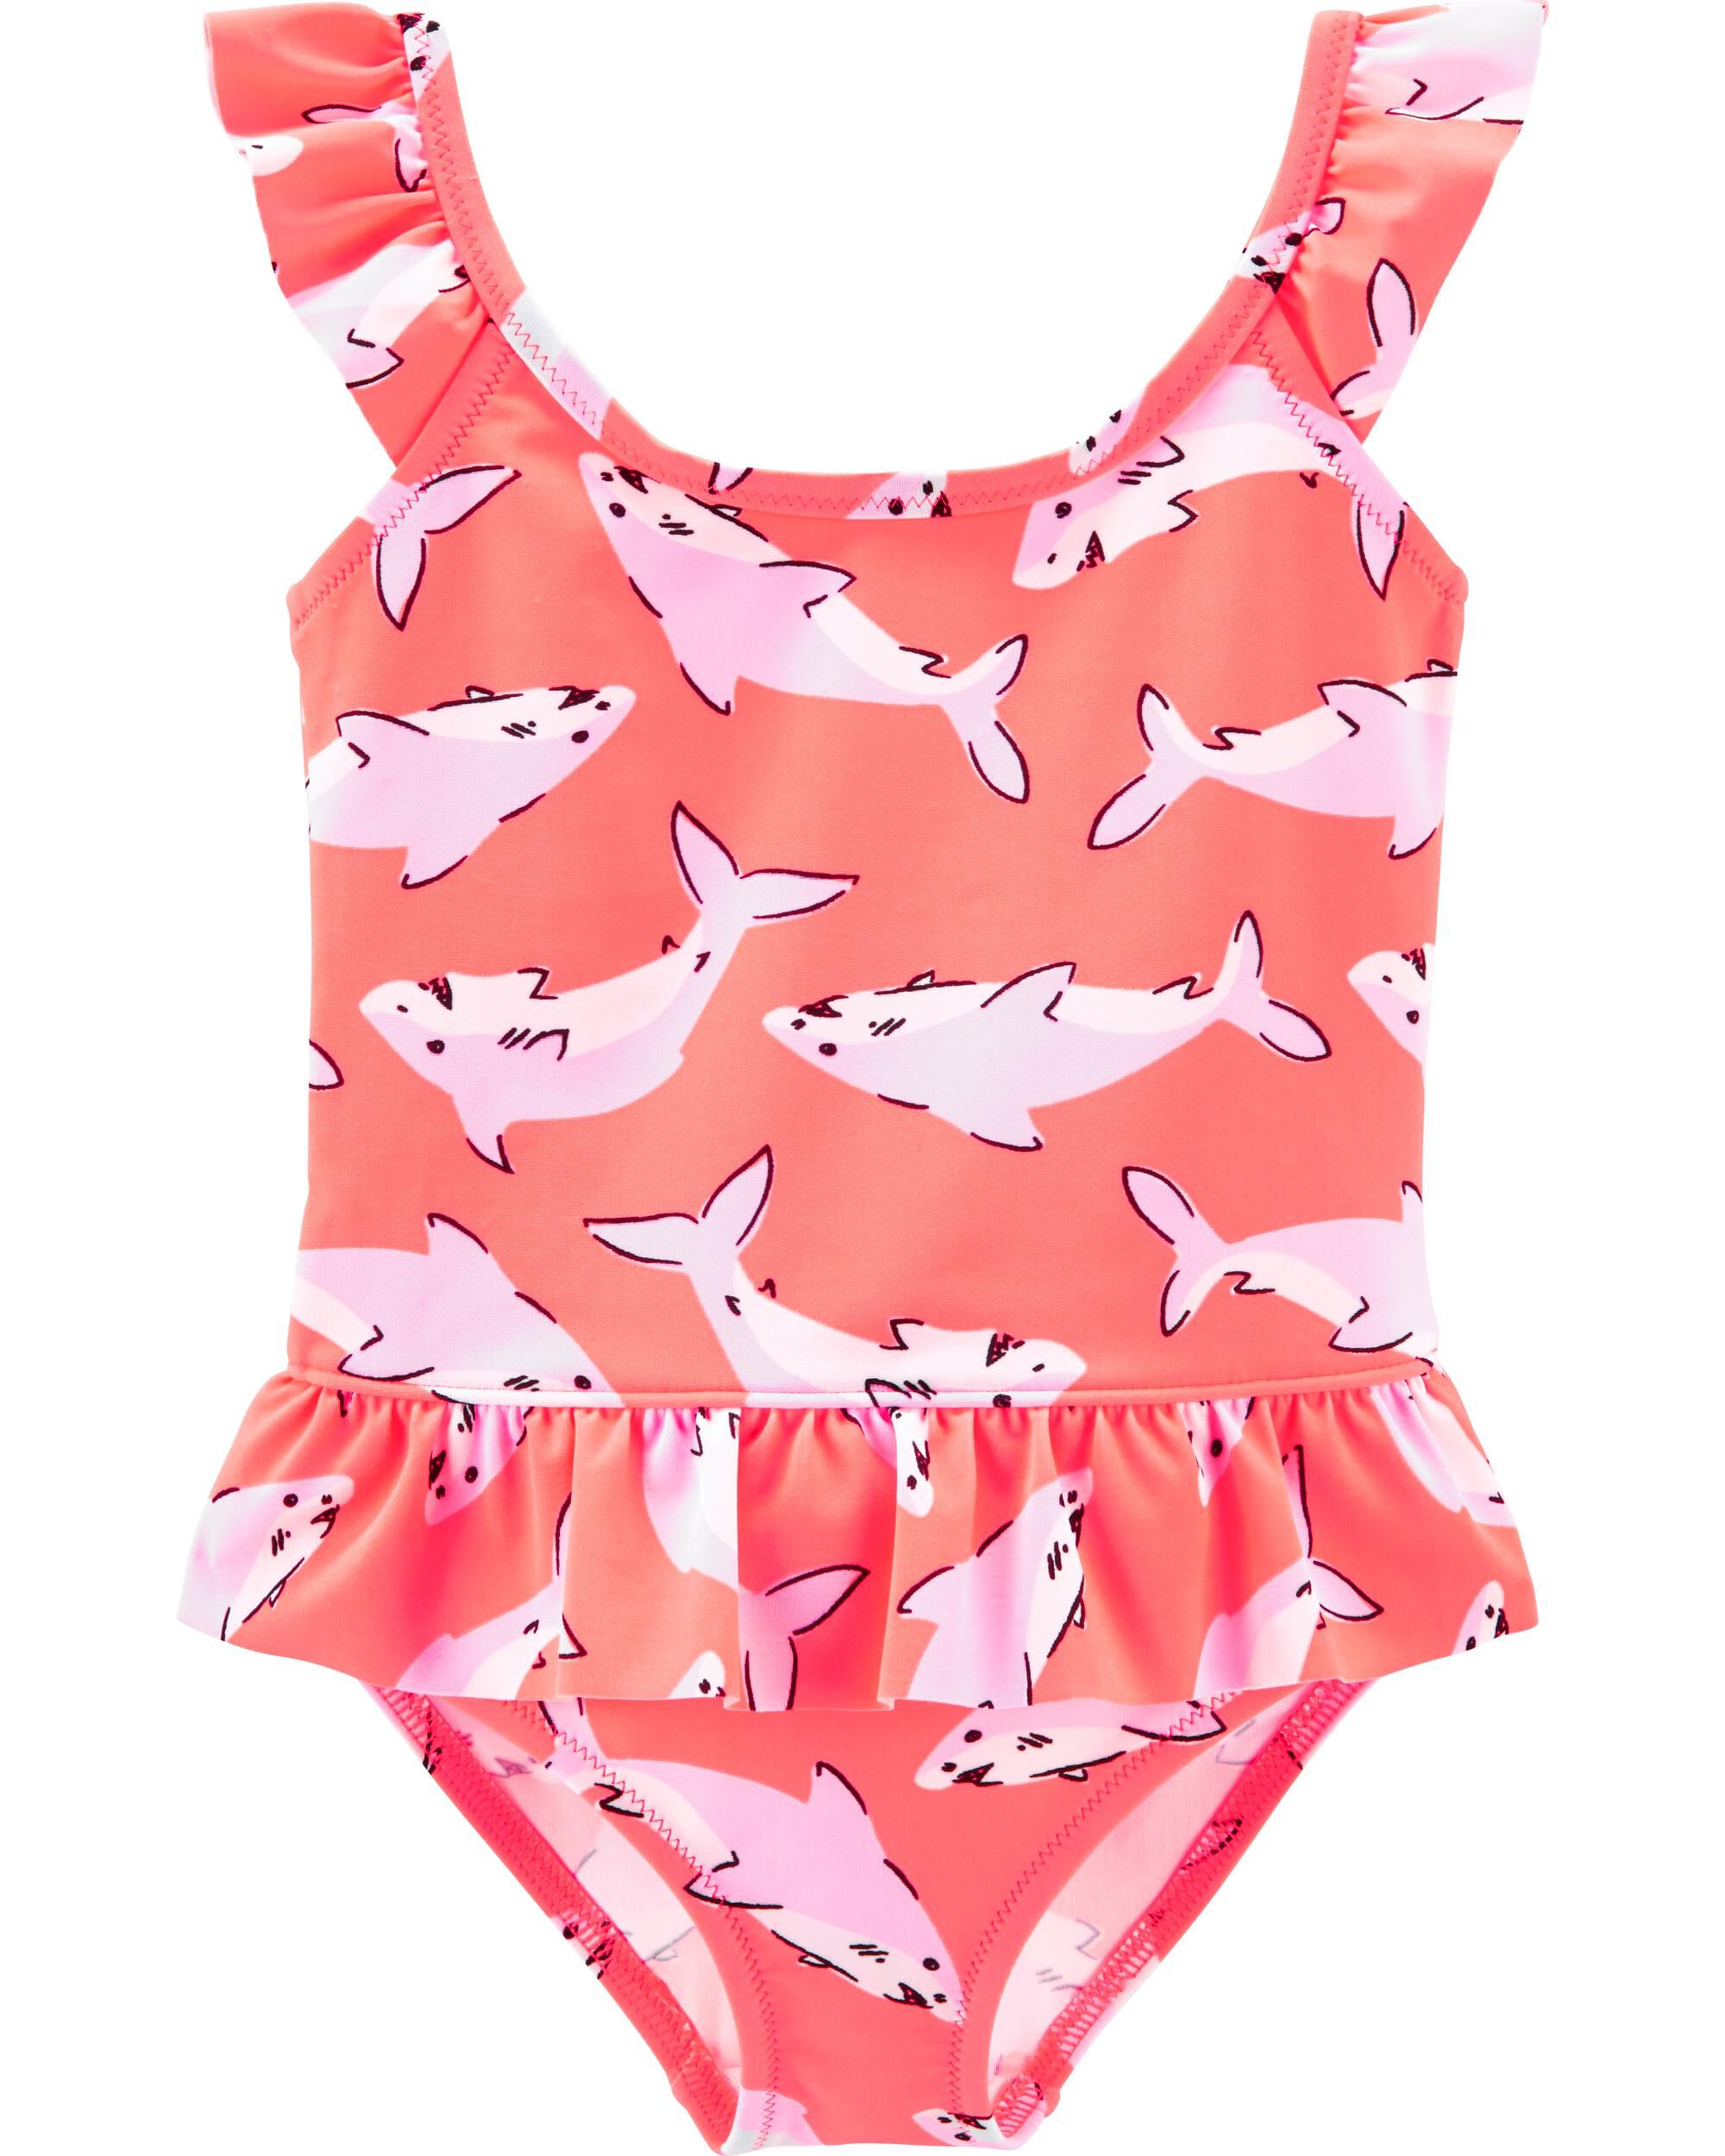 eKooBee Newborn Infant Baby Girls Swimwear One Piece Polka Dot Navy Pink